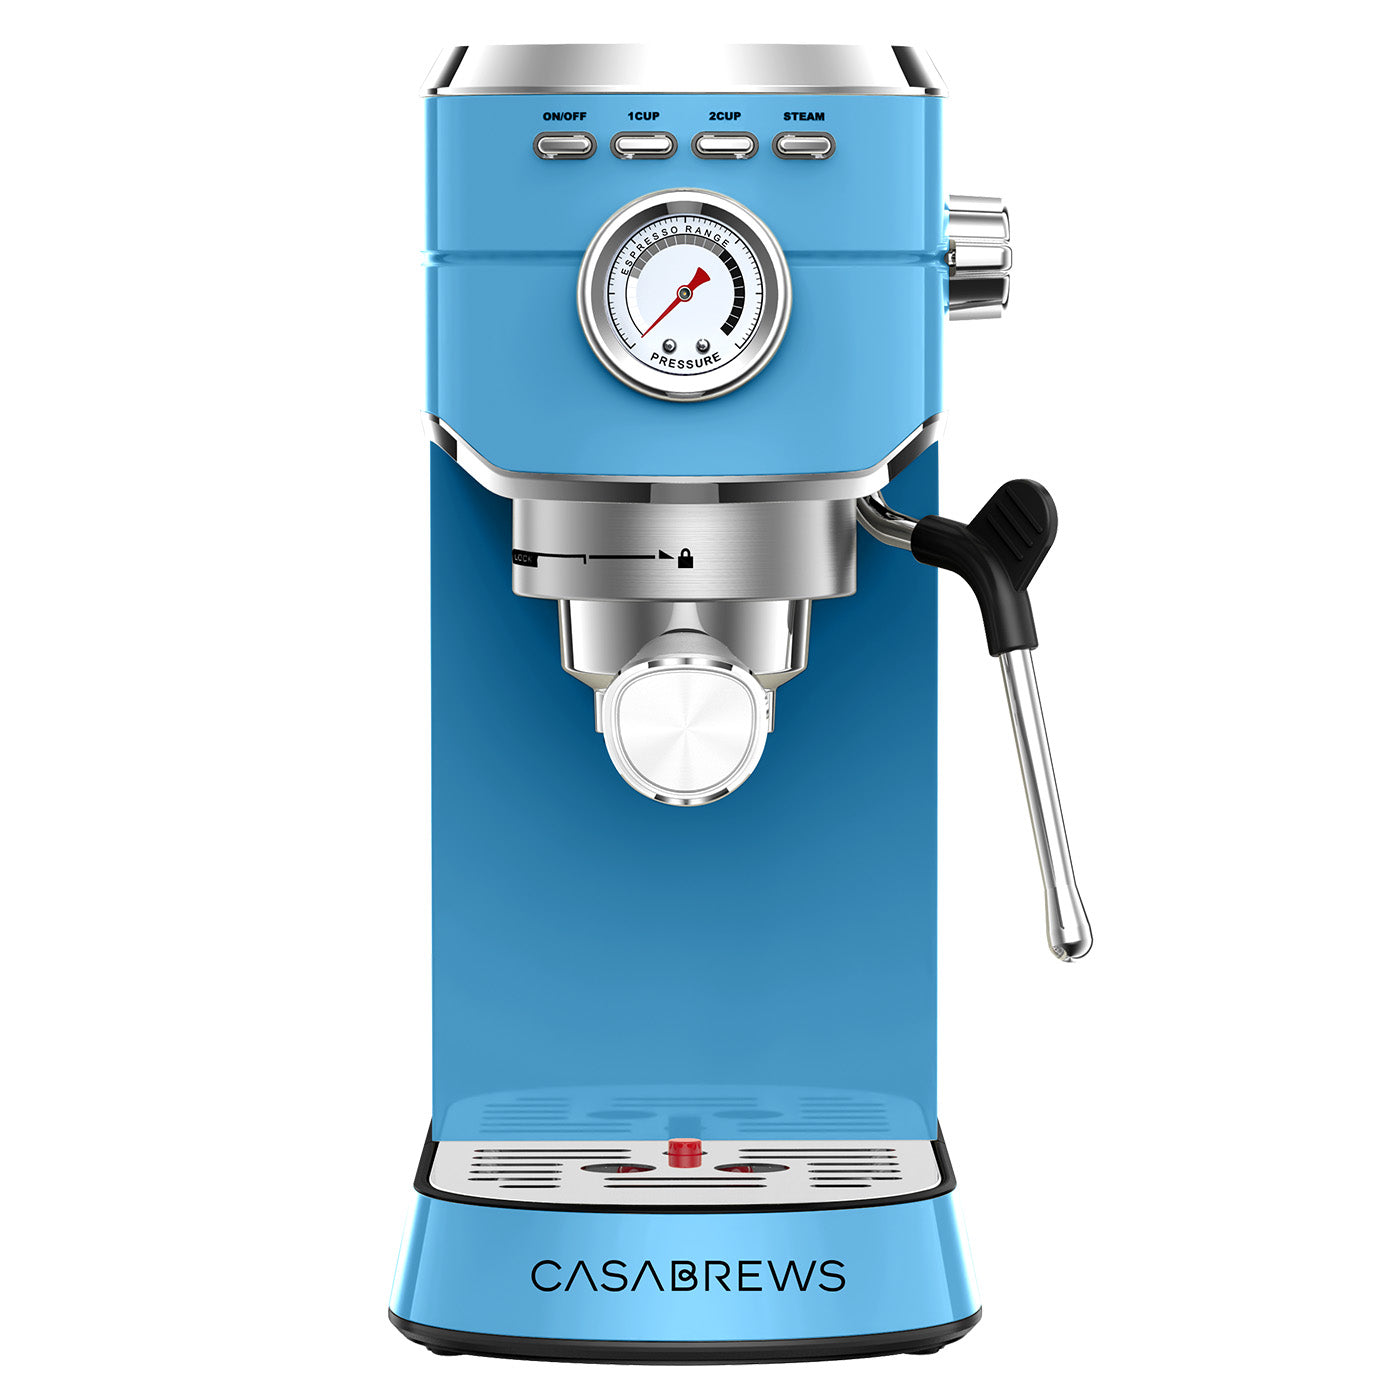 Sincreative CM1699 Casabrews Professional Compact 20 Bar Espresso